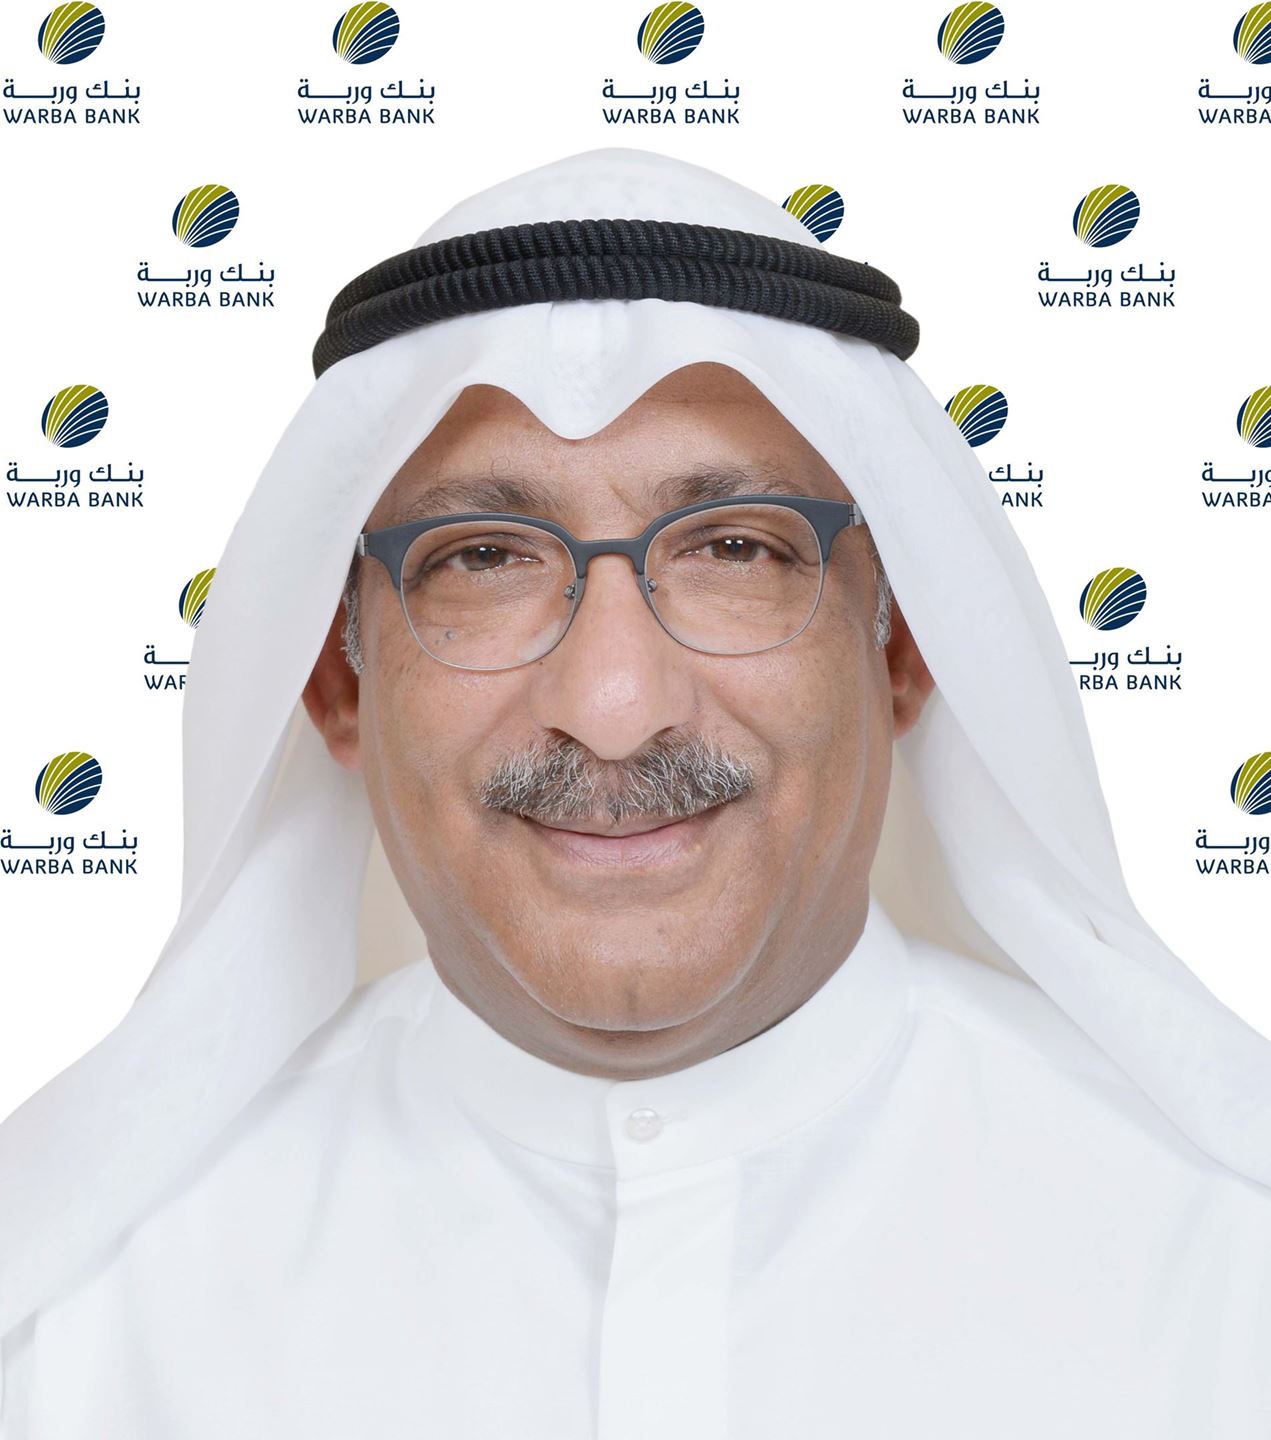 Mr. Haitham Al-Terkait, the Chief IT Group